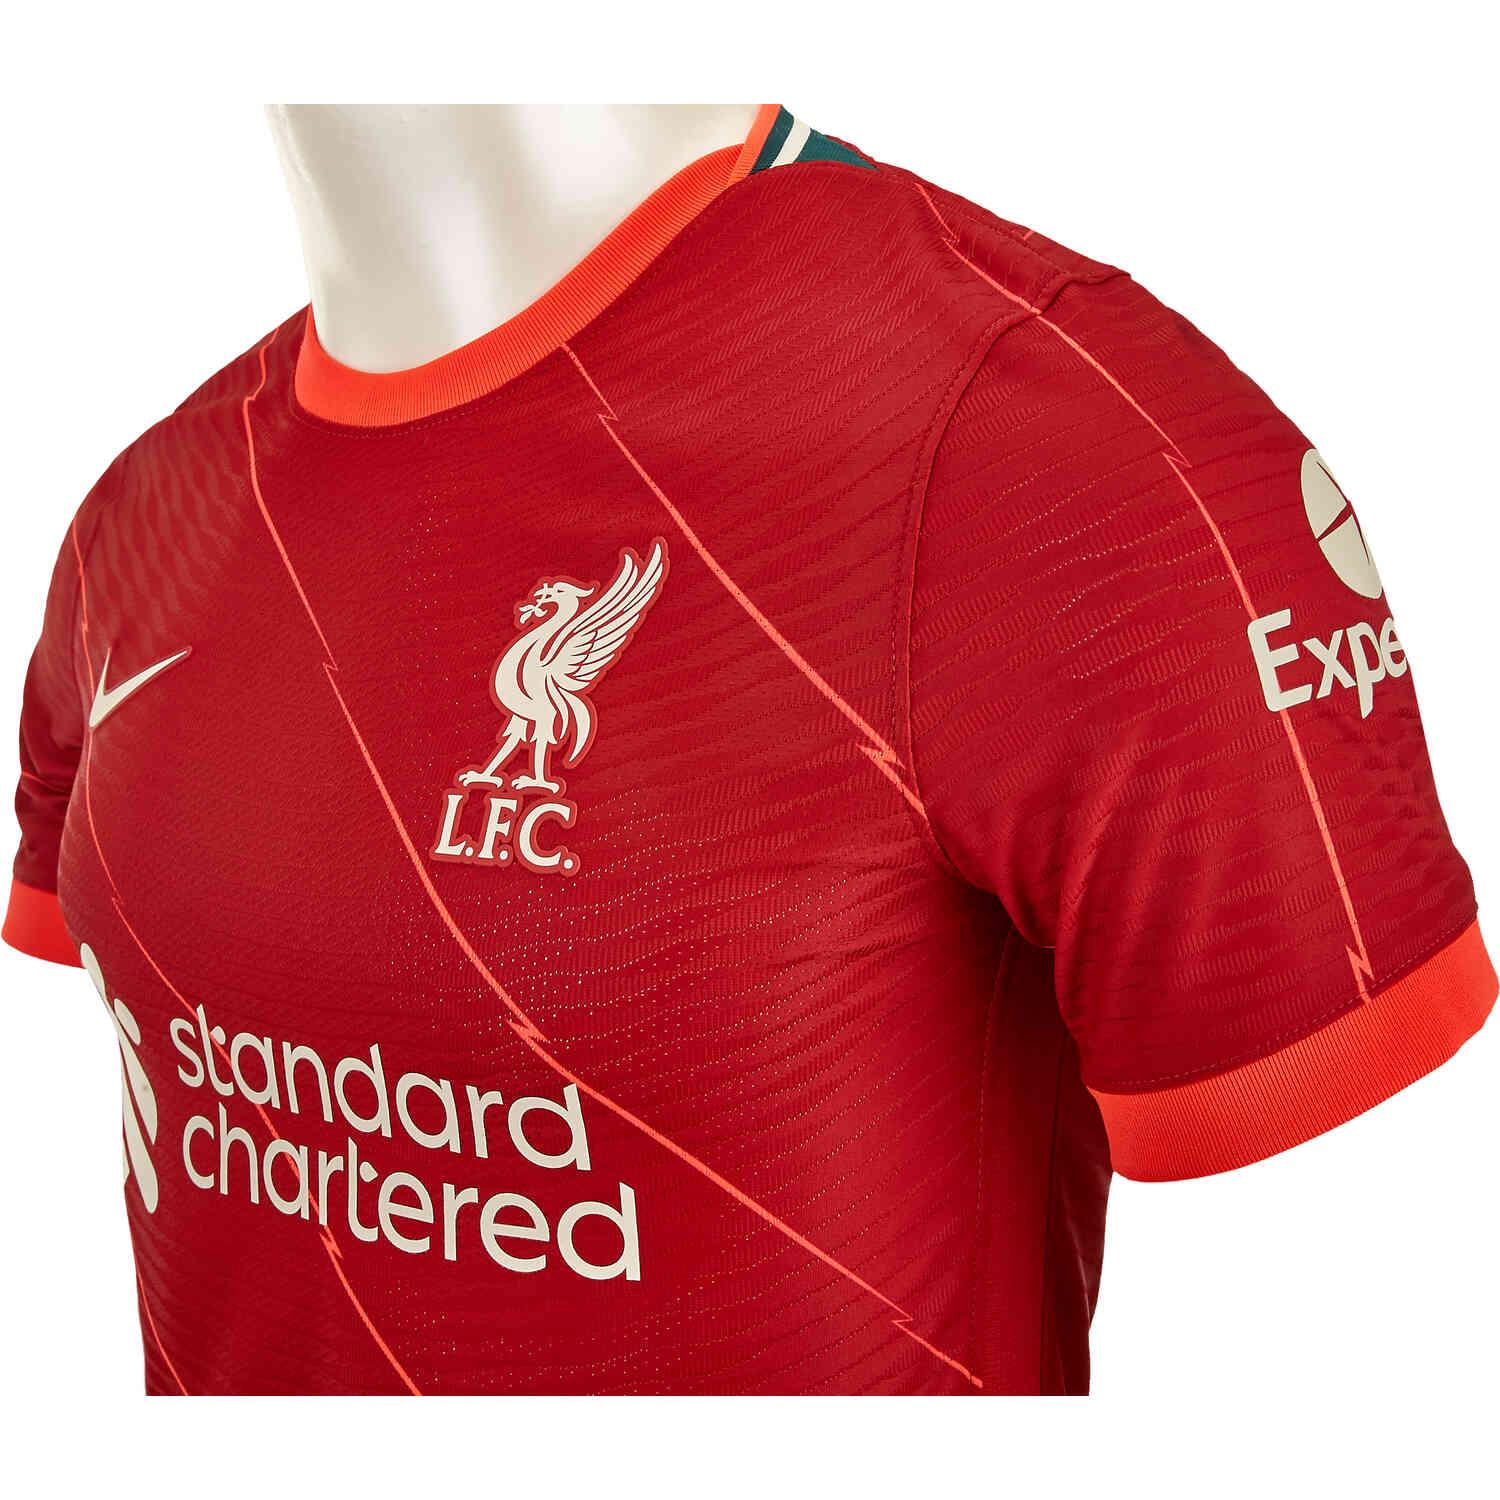 2021/22 Nike Liverpool Home Match Jersey - SoccerPro